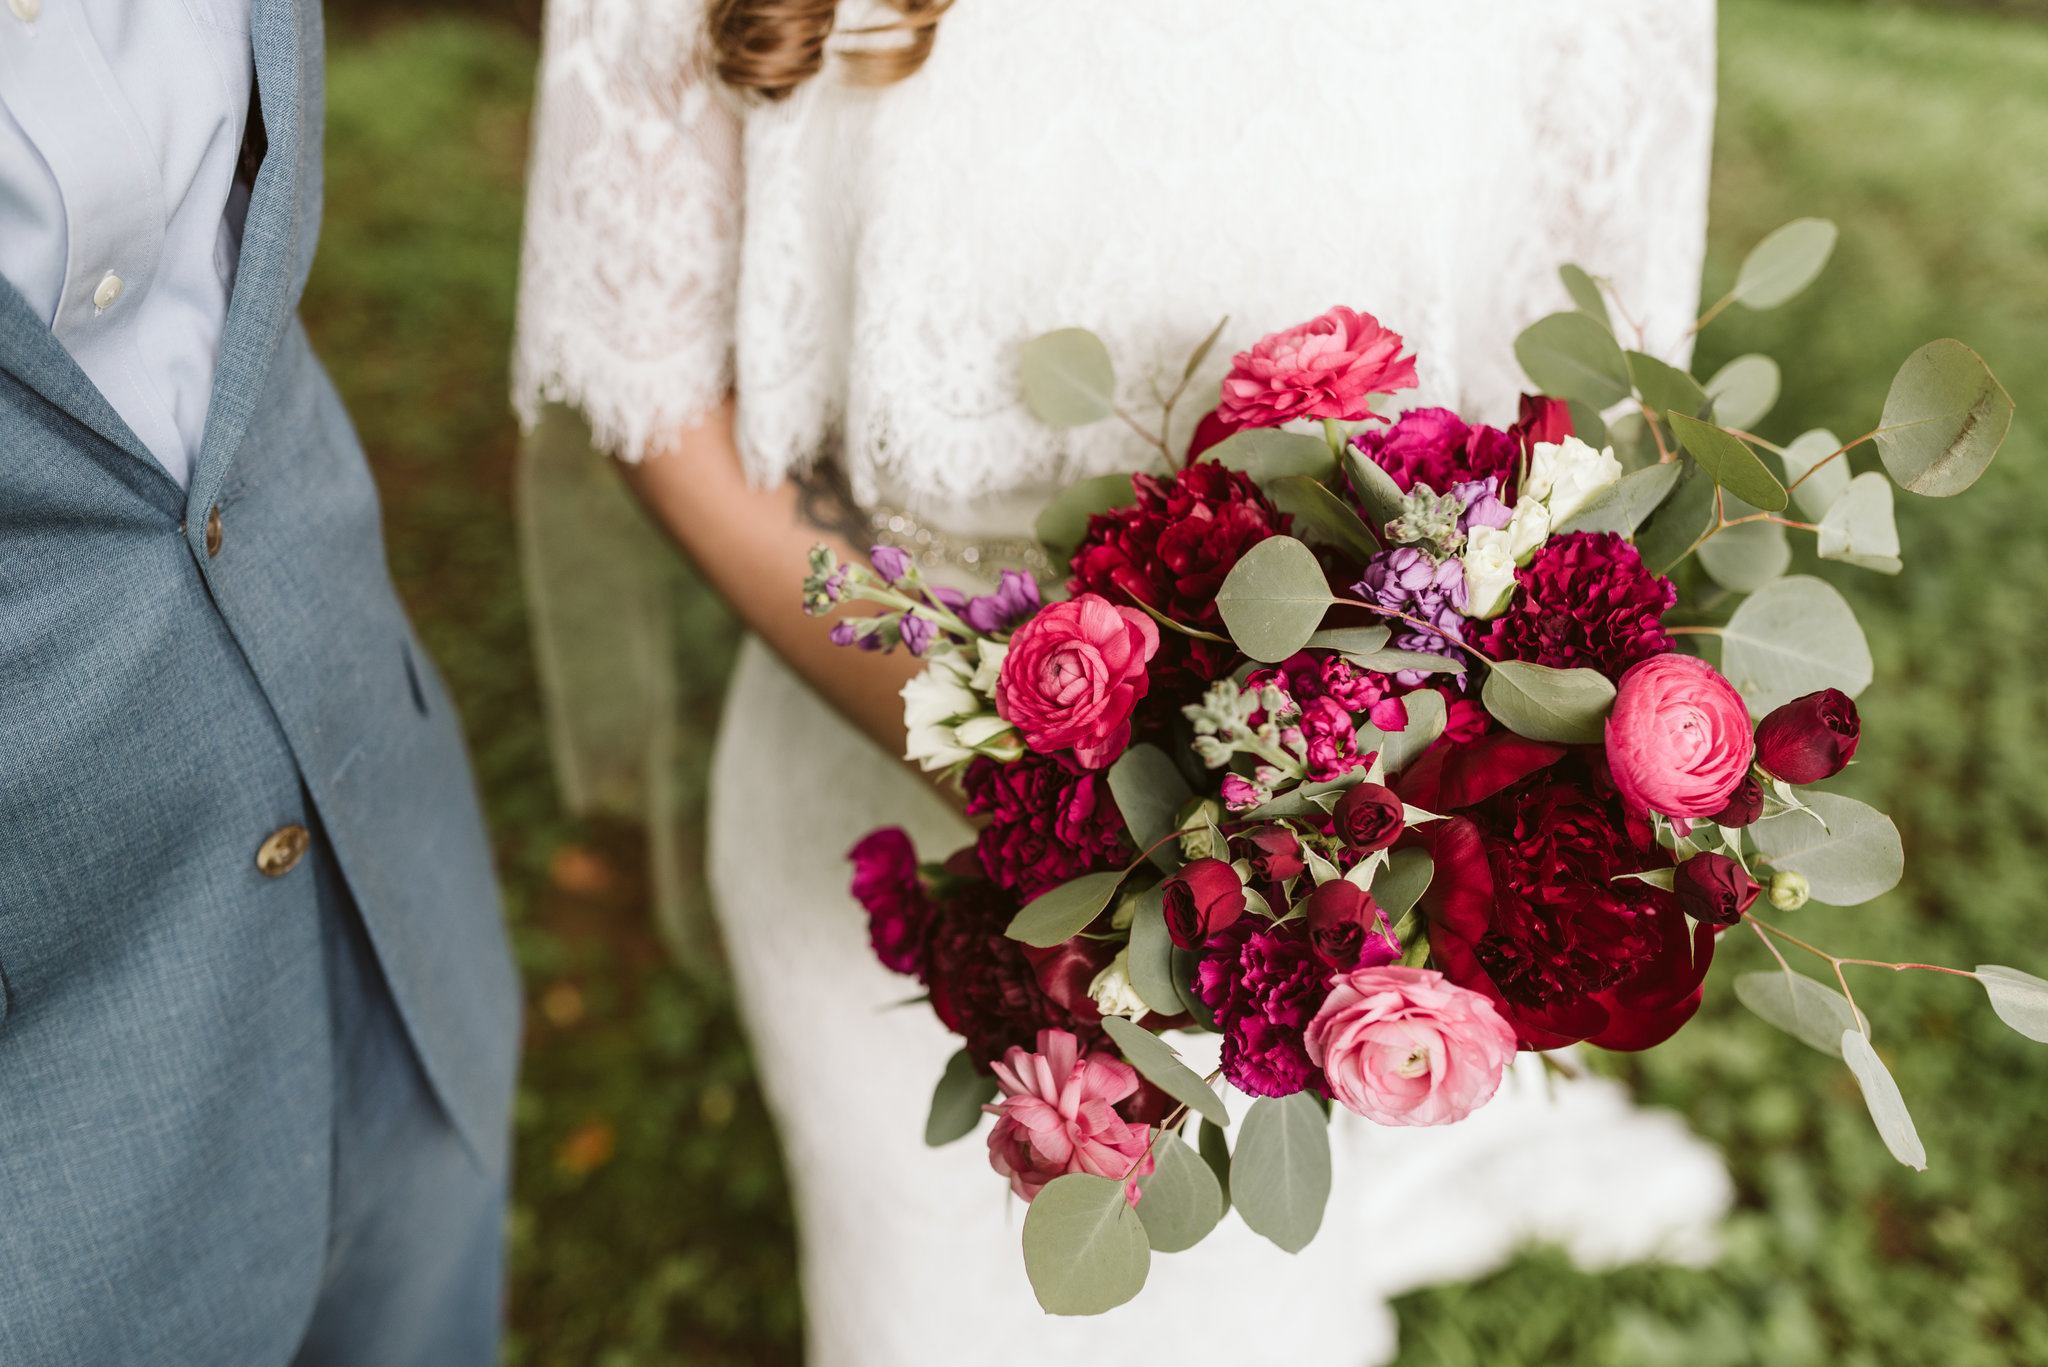  Annapolis, Quaker Wedding, Maryland Wedding Photographer, Intimate, Small Wedding, Vintage, DIY, Pink Flowers, Lace Wedding Dress, Pink Peony Bouquet 